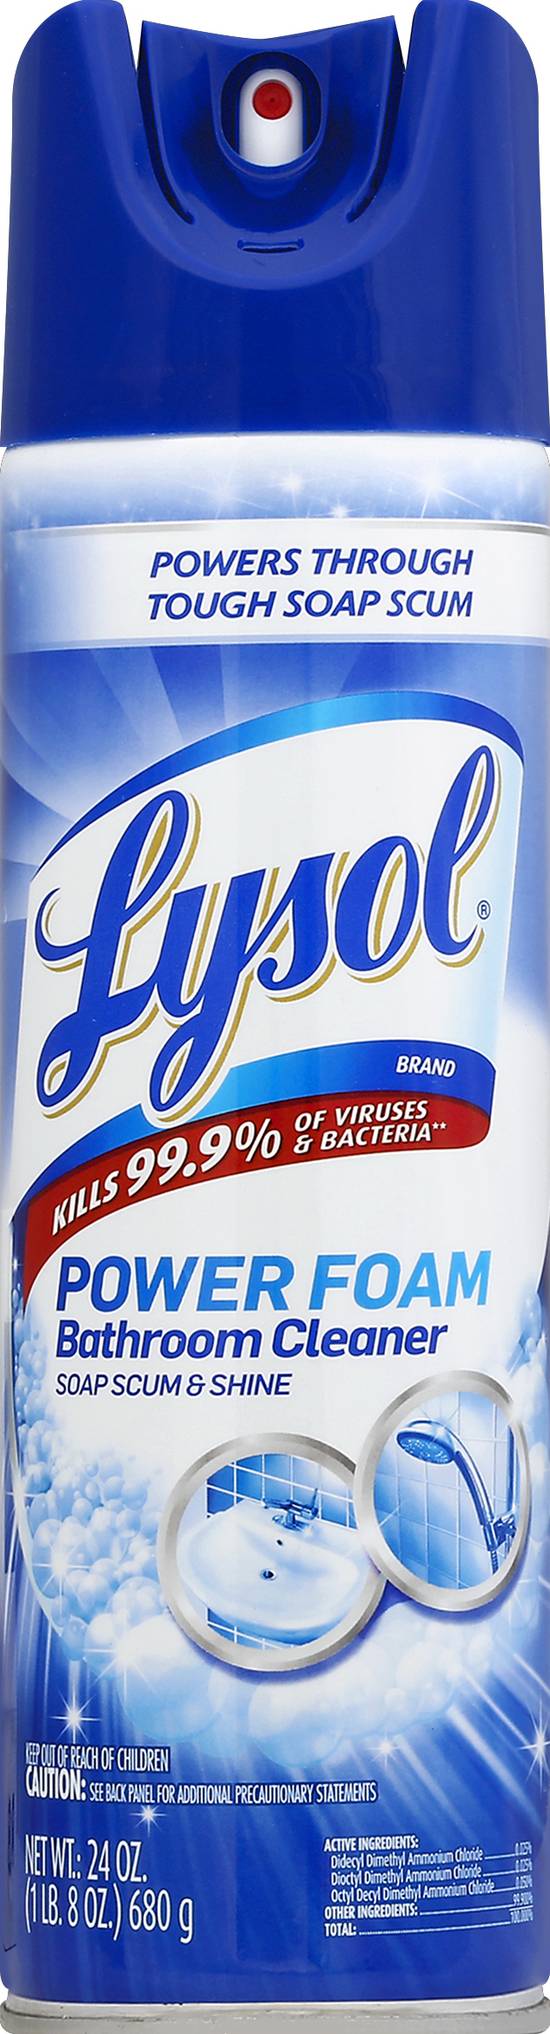 Lysol Power Foam Bathroom Cleaner